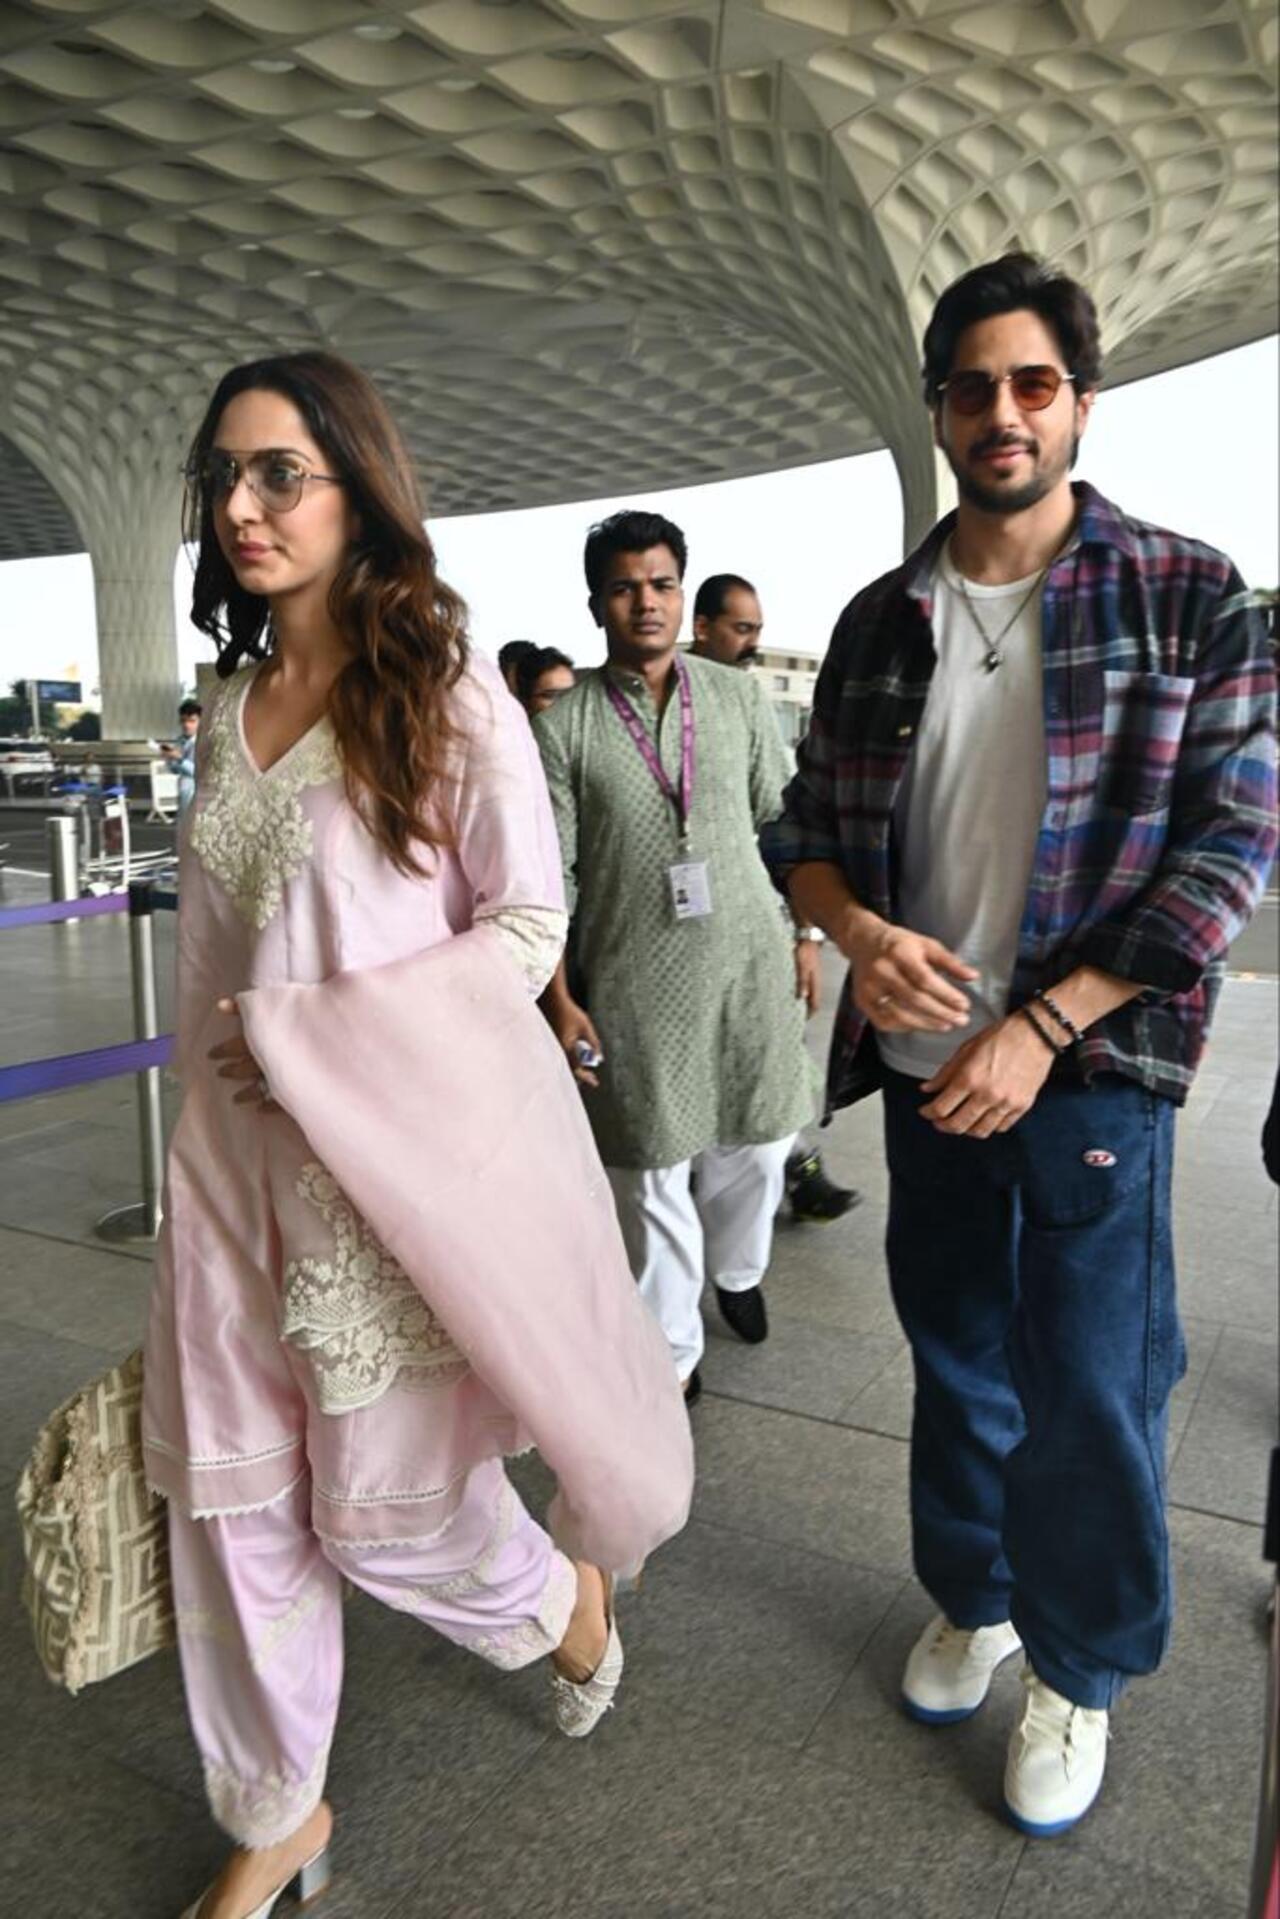 Kiara and Sidharth were heading to Delhi for their first Diwali